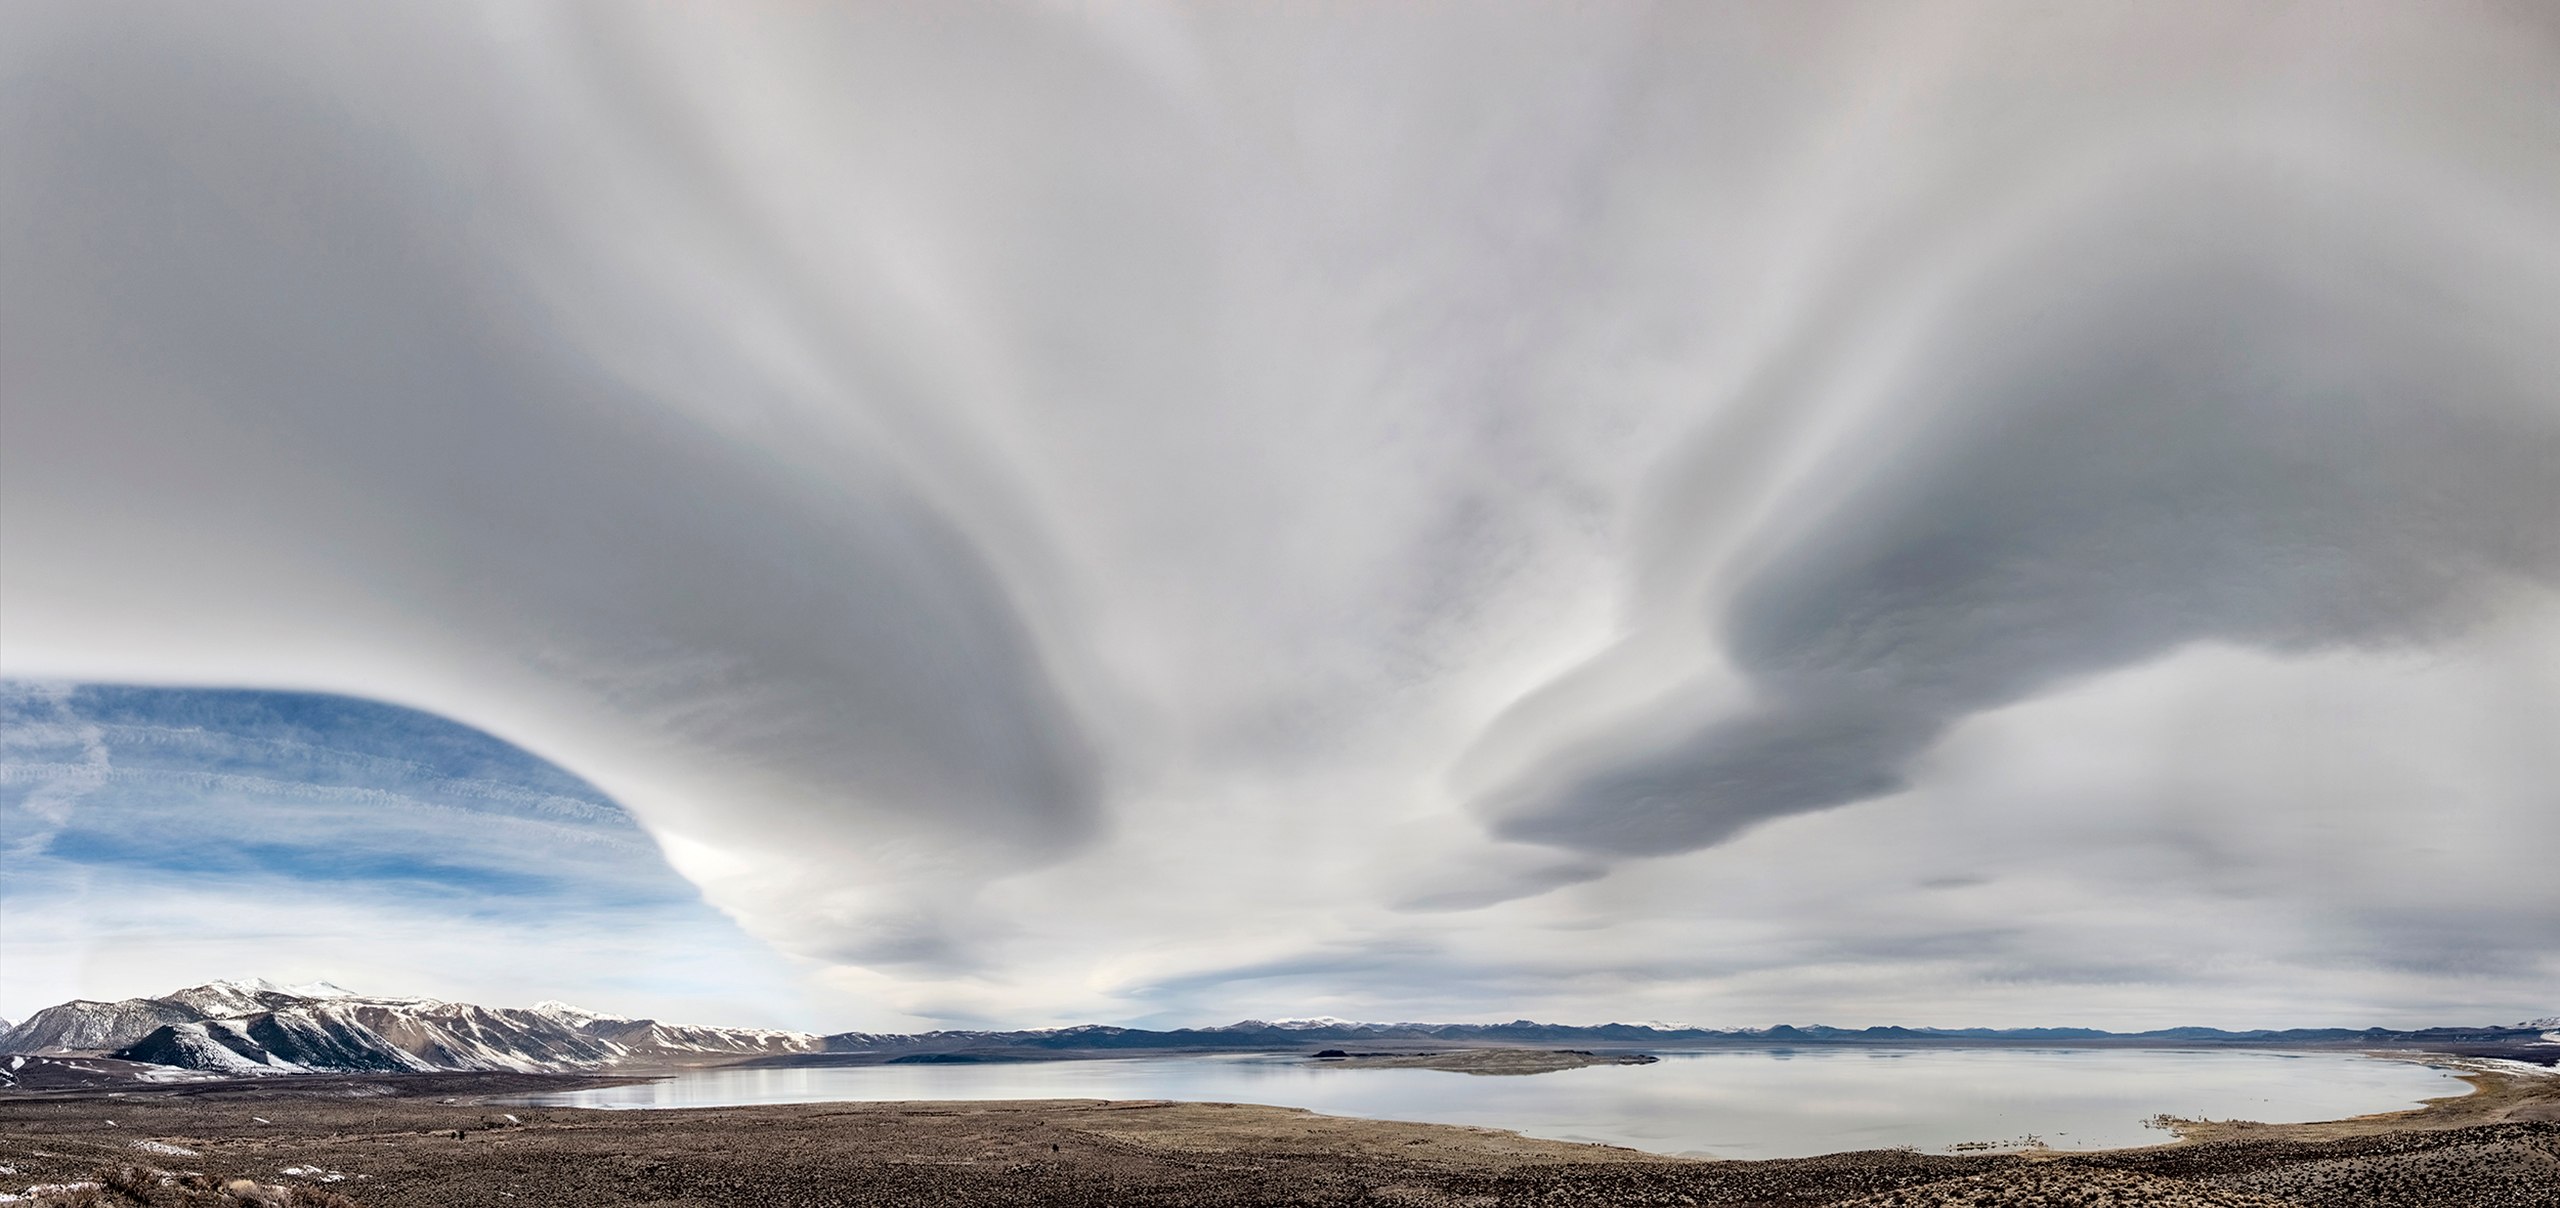 Passing Storm, Mono Lake, California